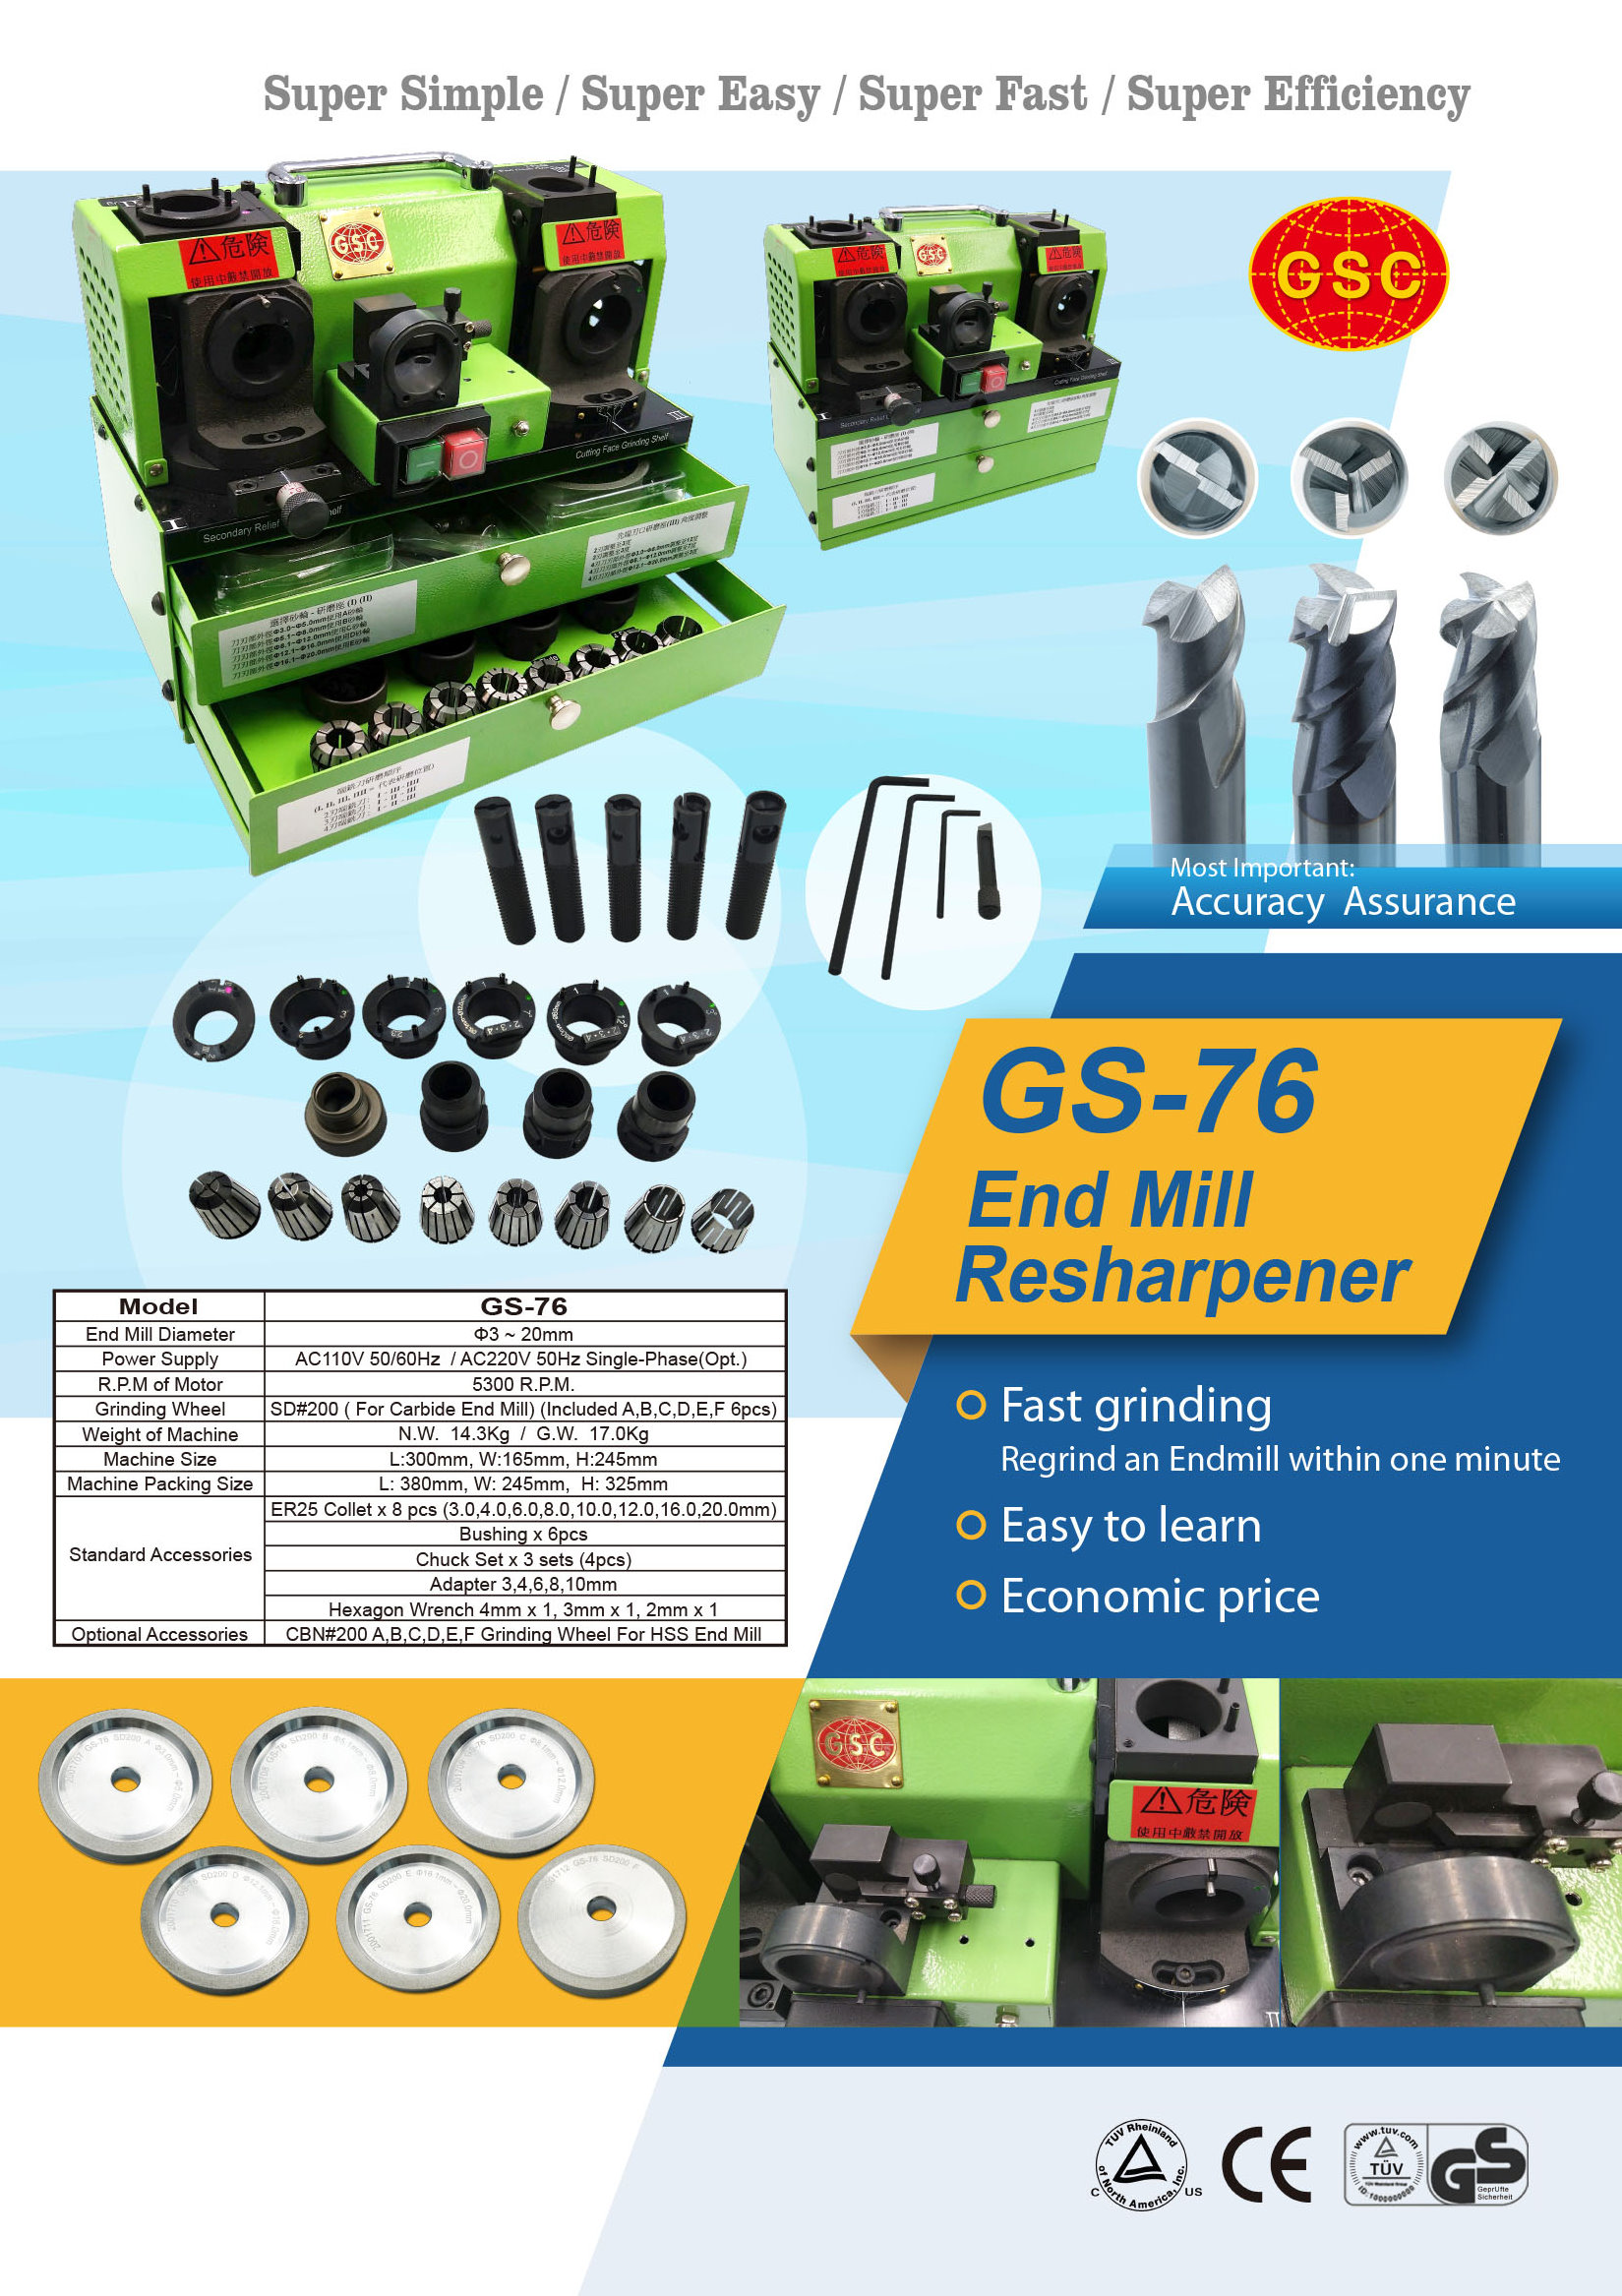 GS-76 End Mill Re-sharpener